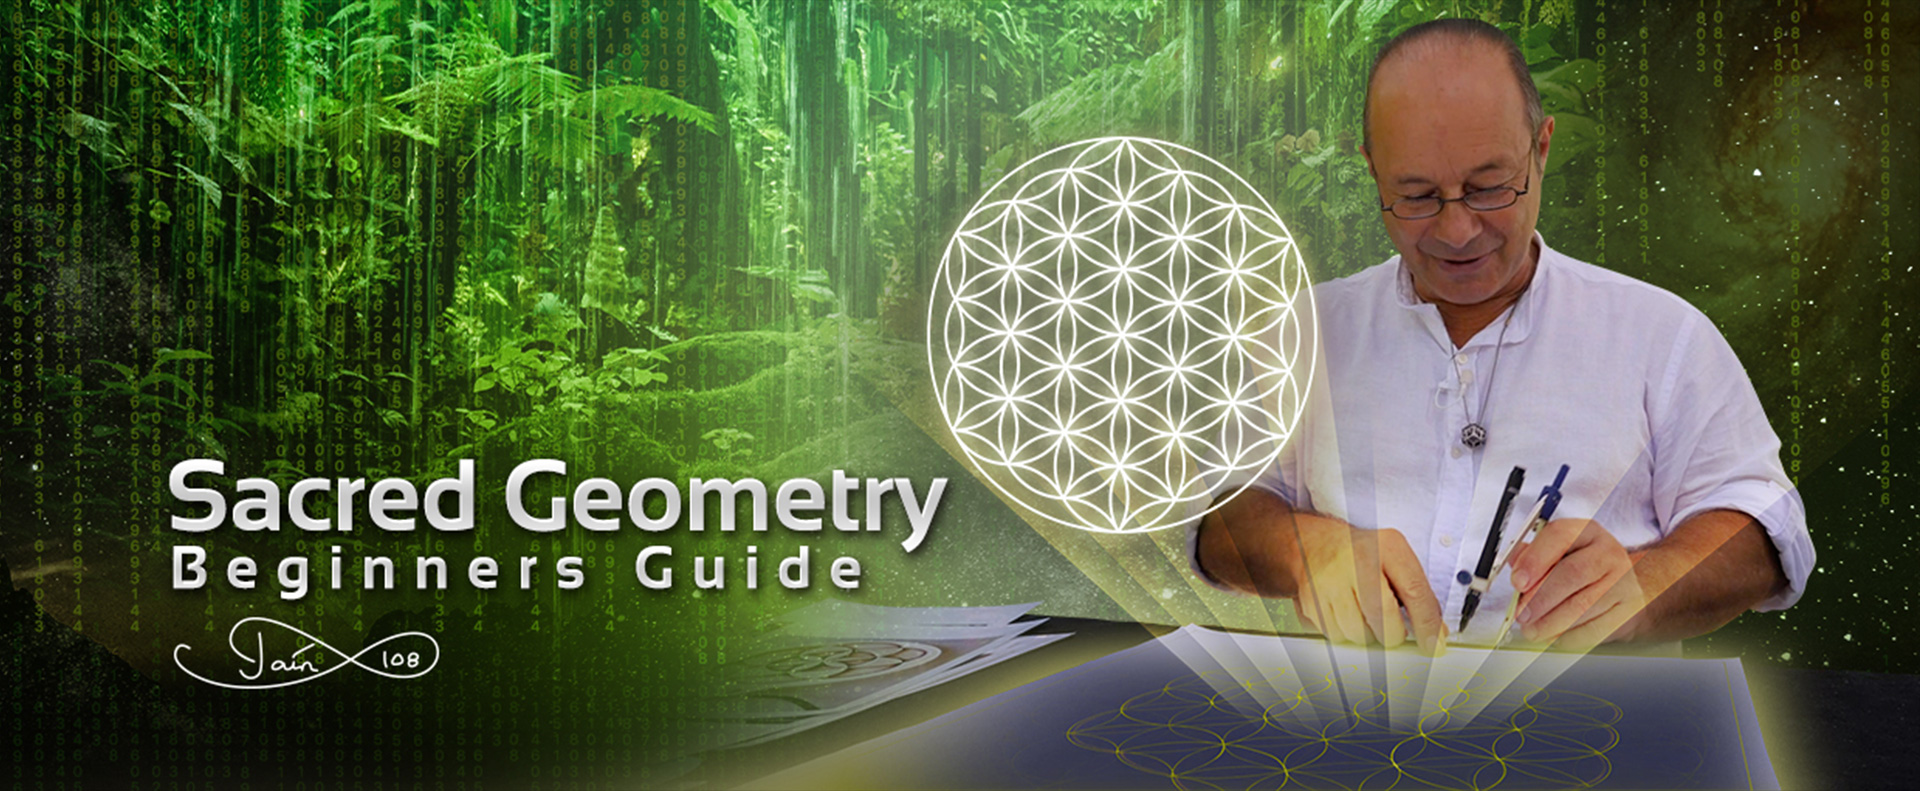 Jain 108 - Sacred Geometry: Beginners Guide